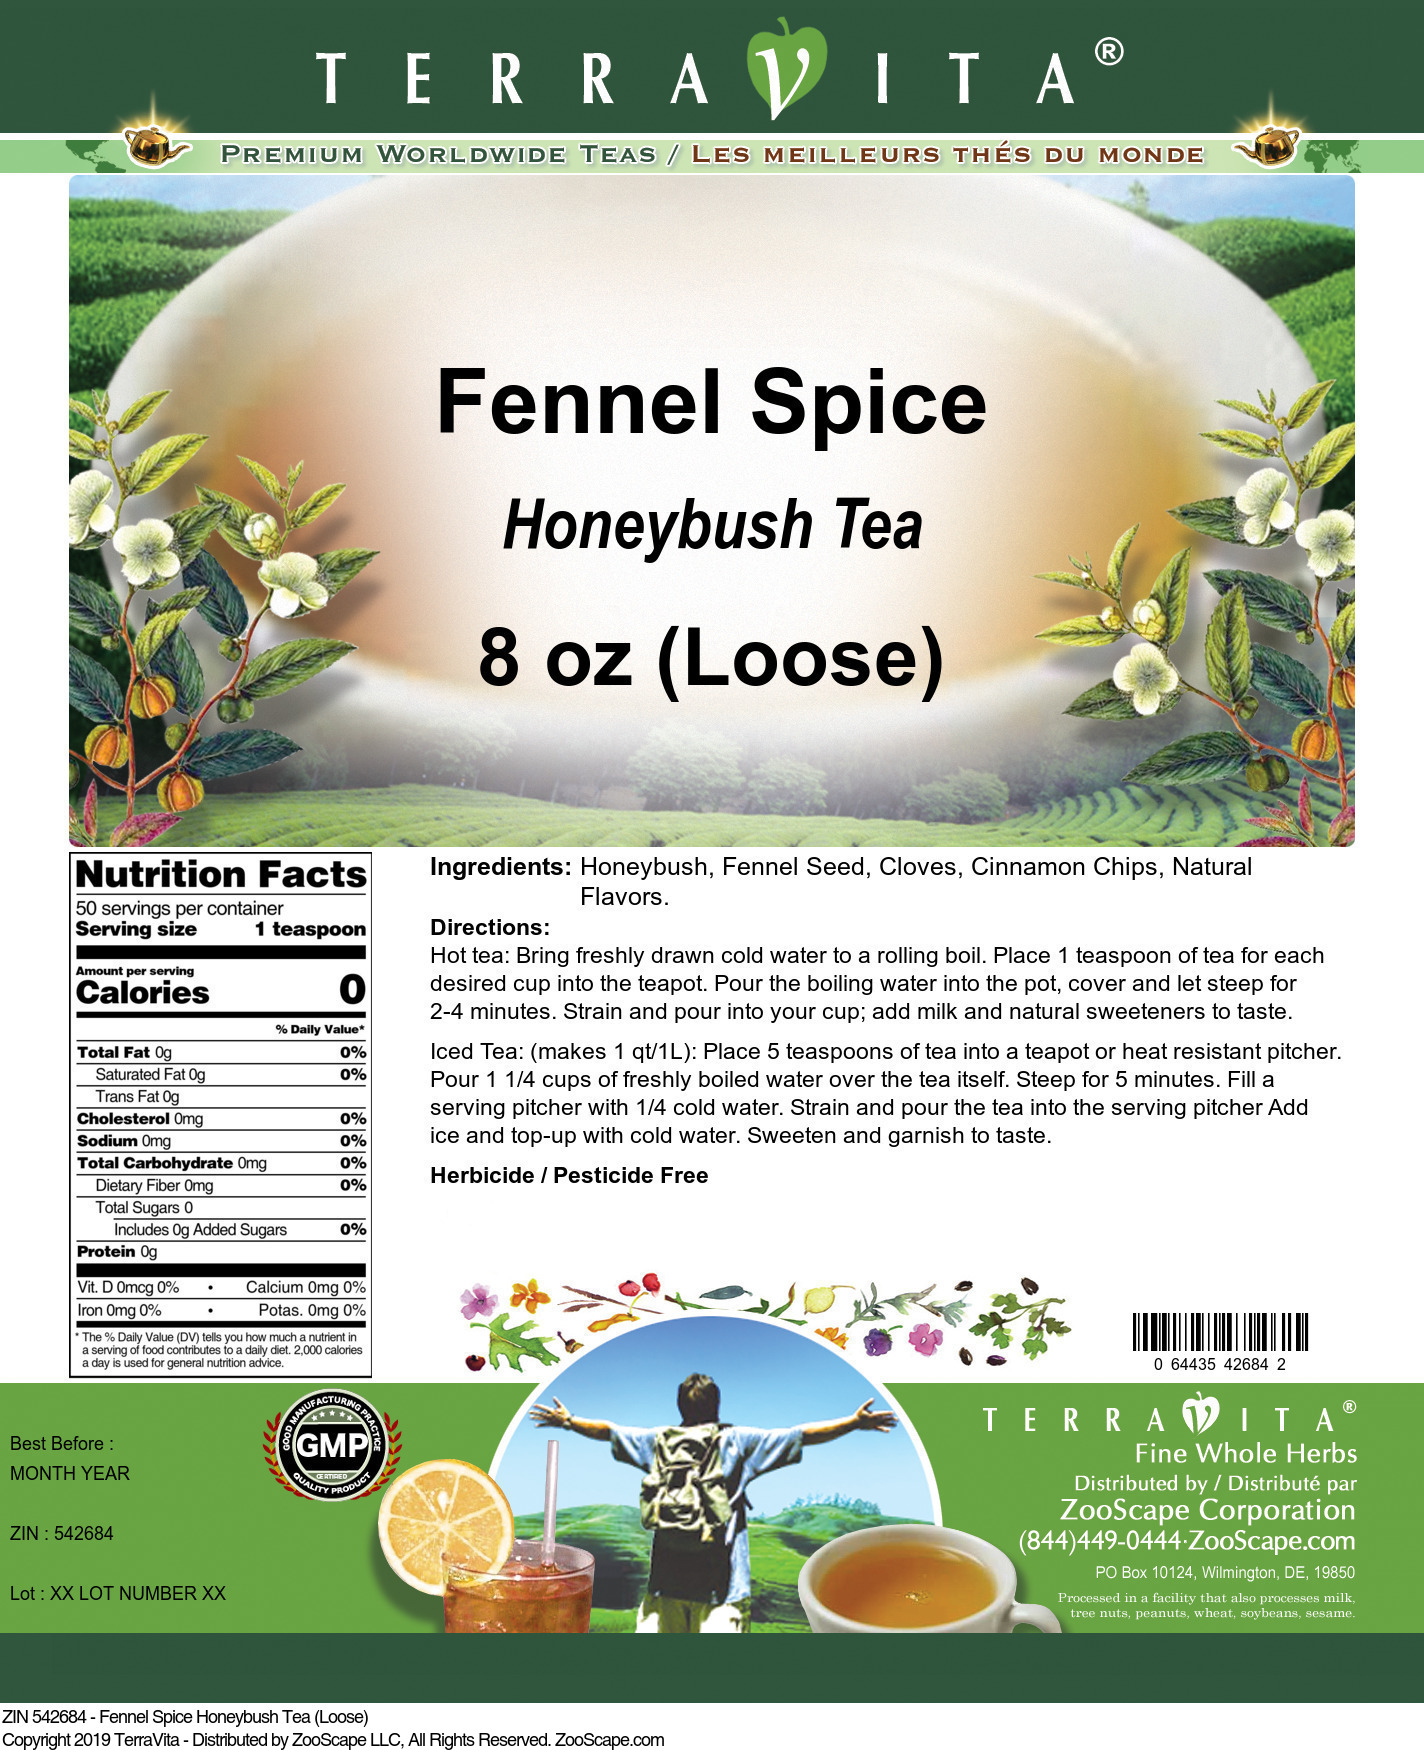 Fennel Spice Honeybush Tea (Loose) - Label